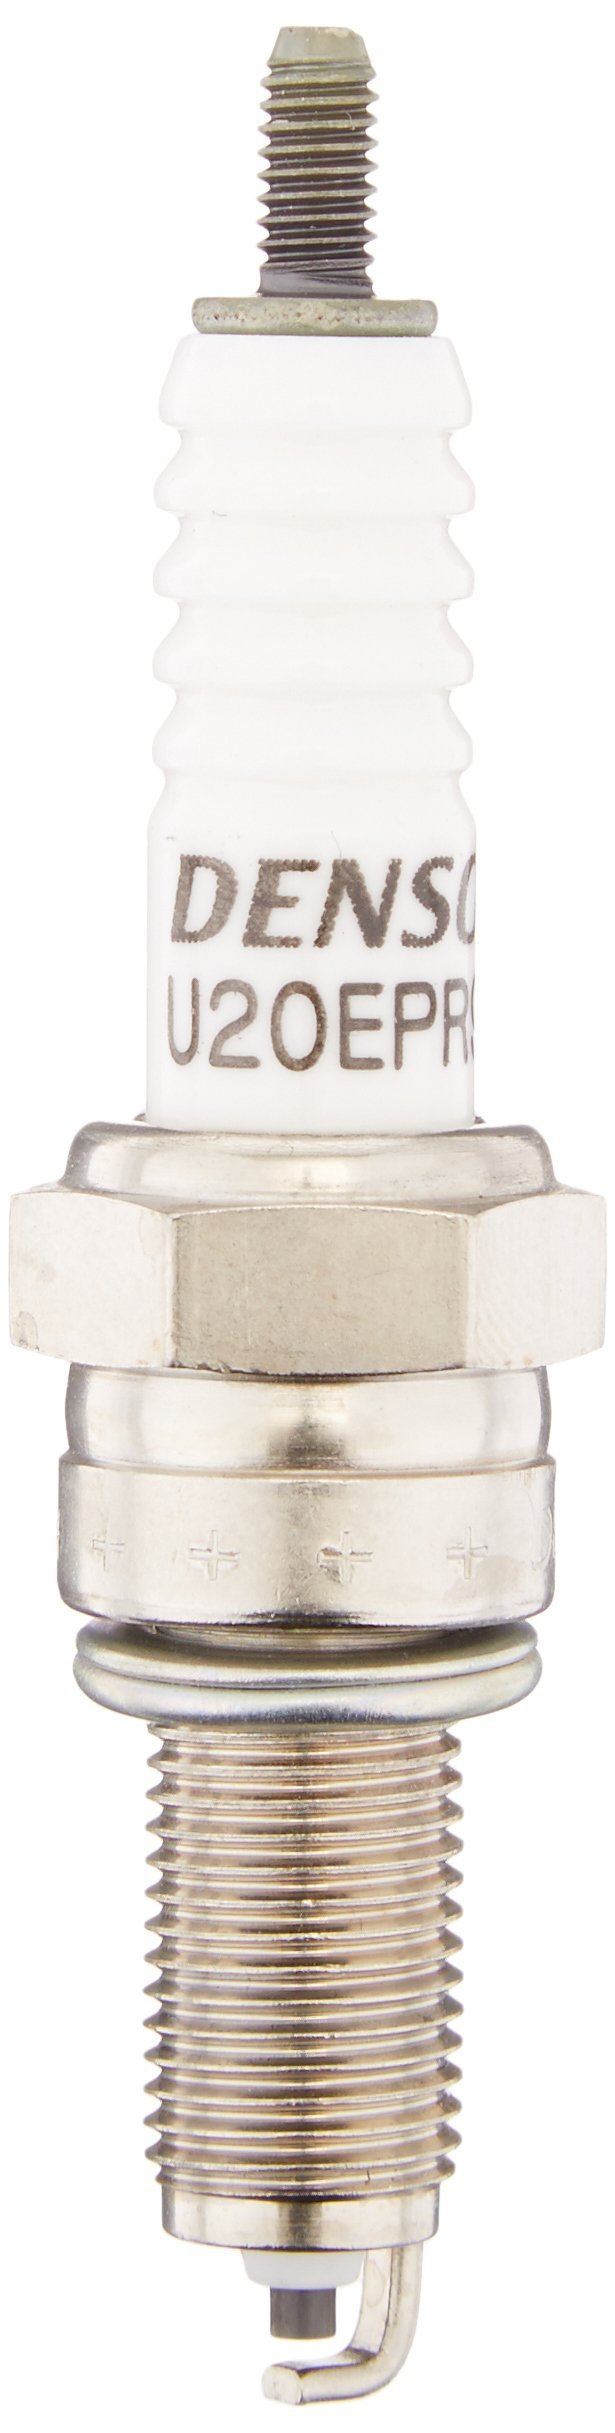 Denso (4228) U20EPR9 Spark Plug, (Pack of 1) - LeoForward Australia